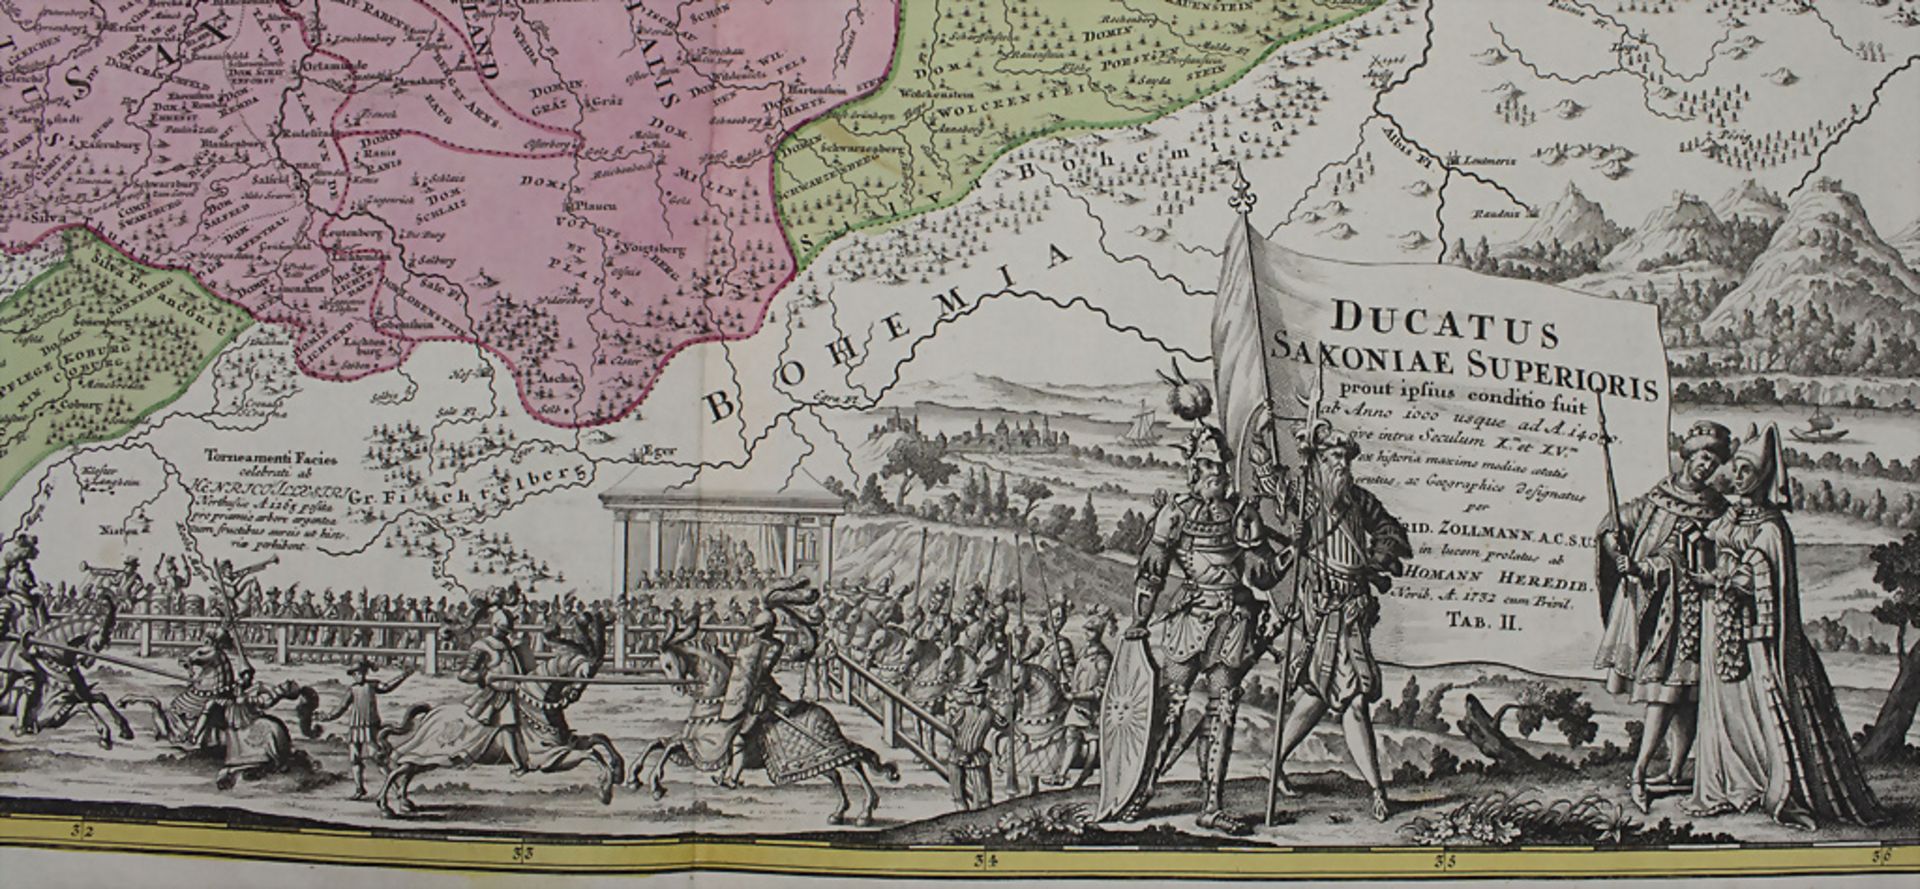 Friedrich ZOLLMANN (1690-1762), 'Ducatus Saxoniae Superioris' (1732) - Image 5 of 7